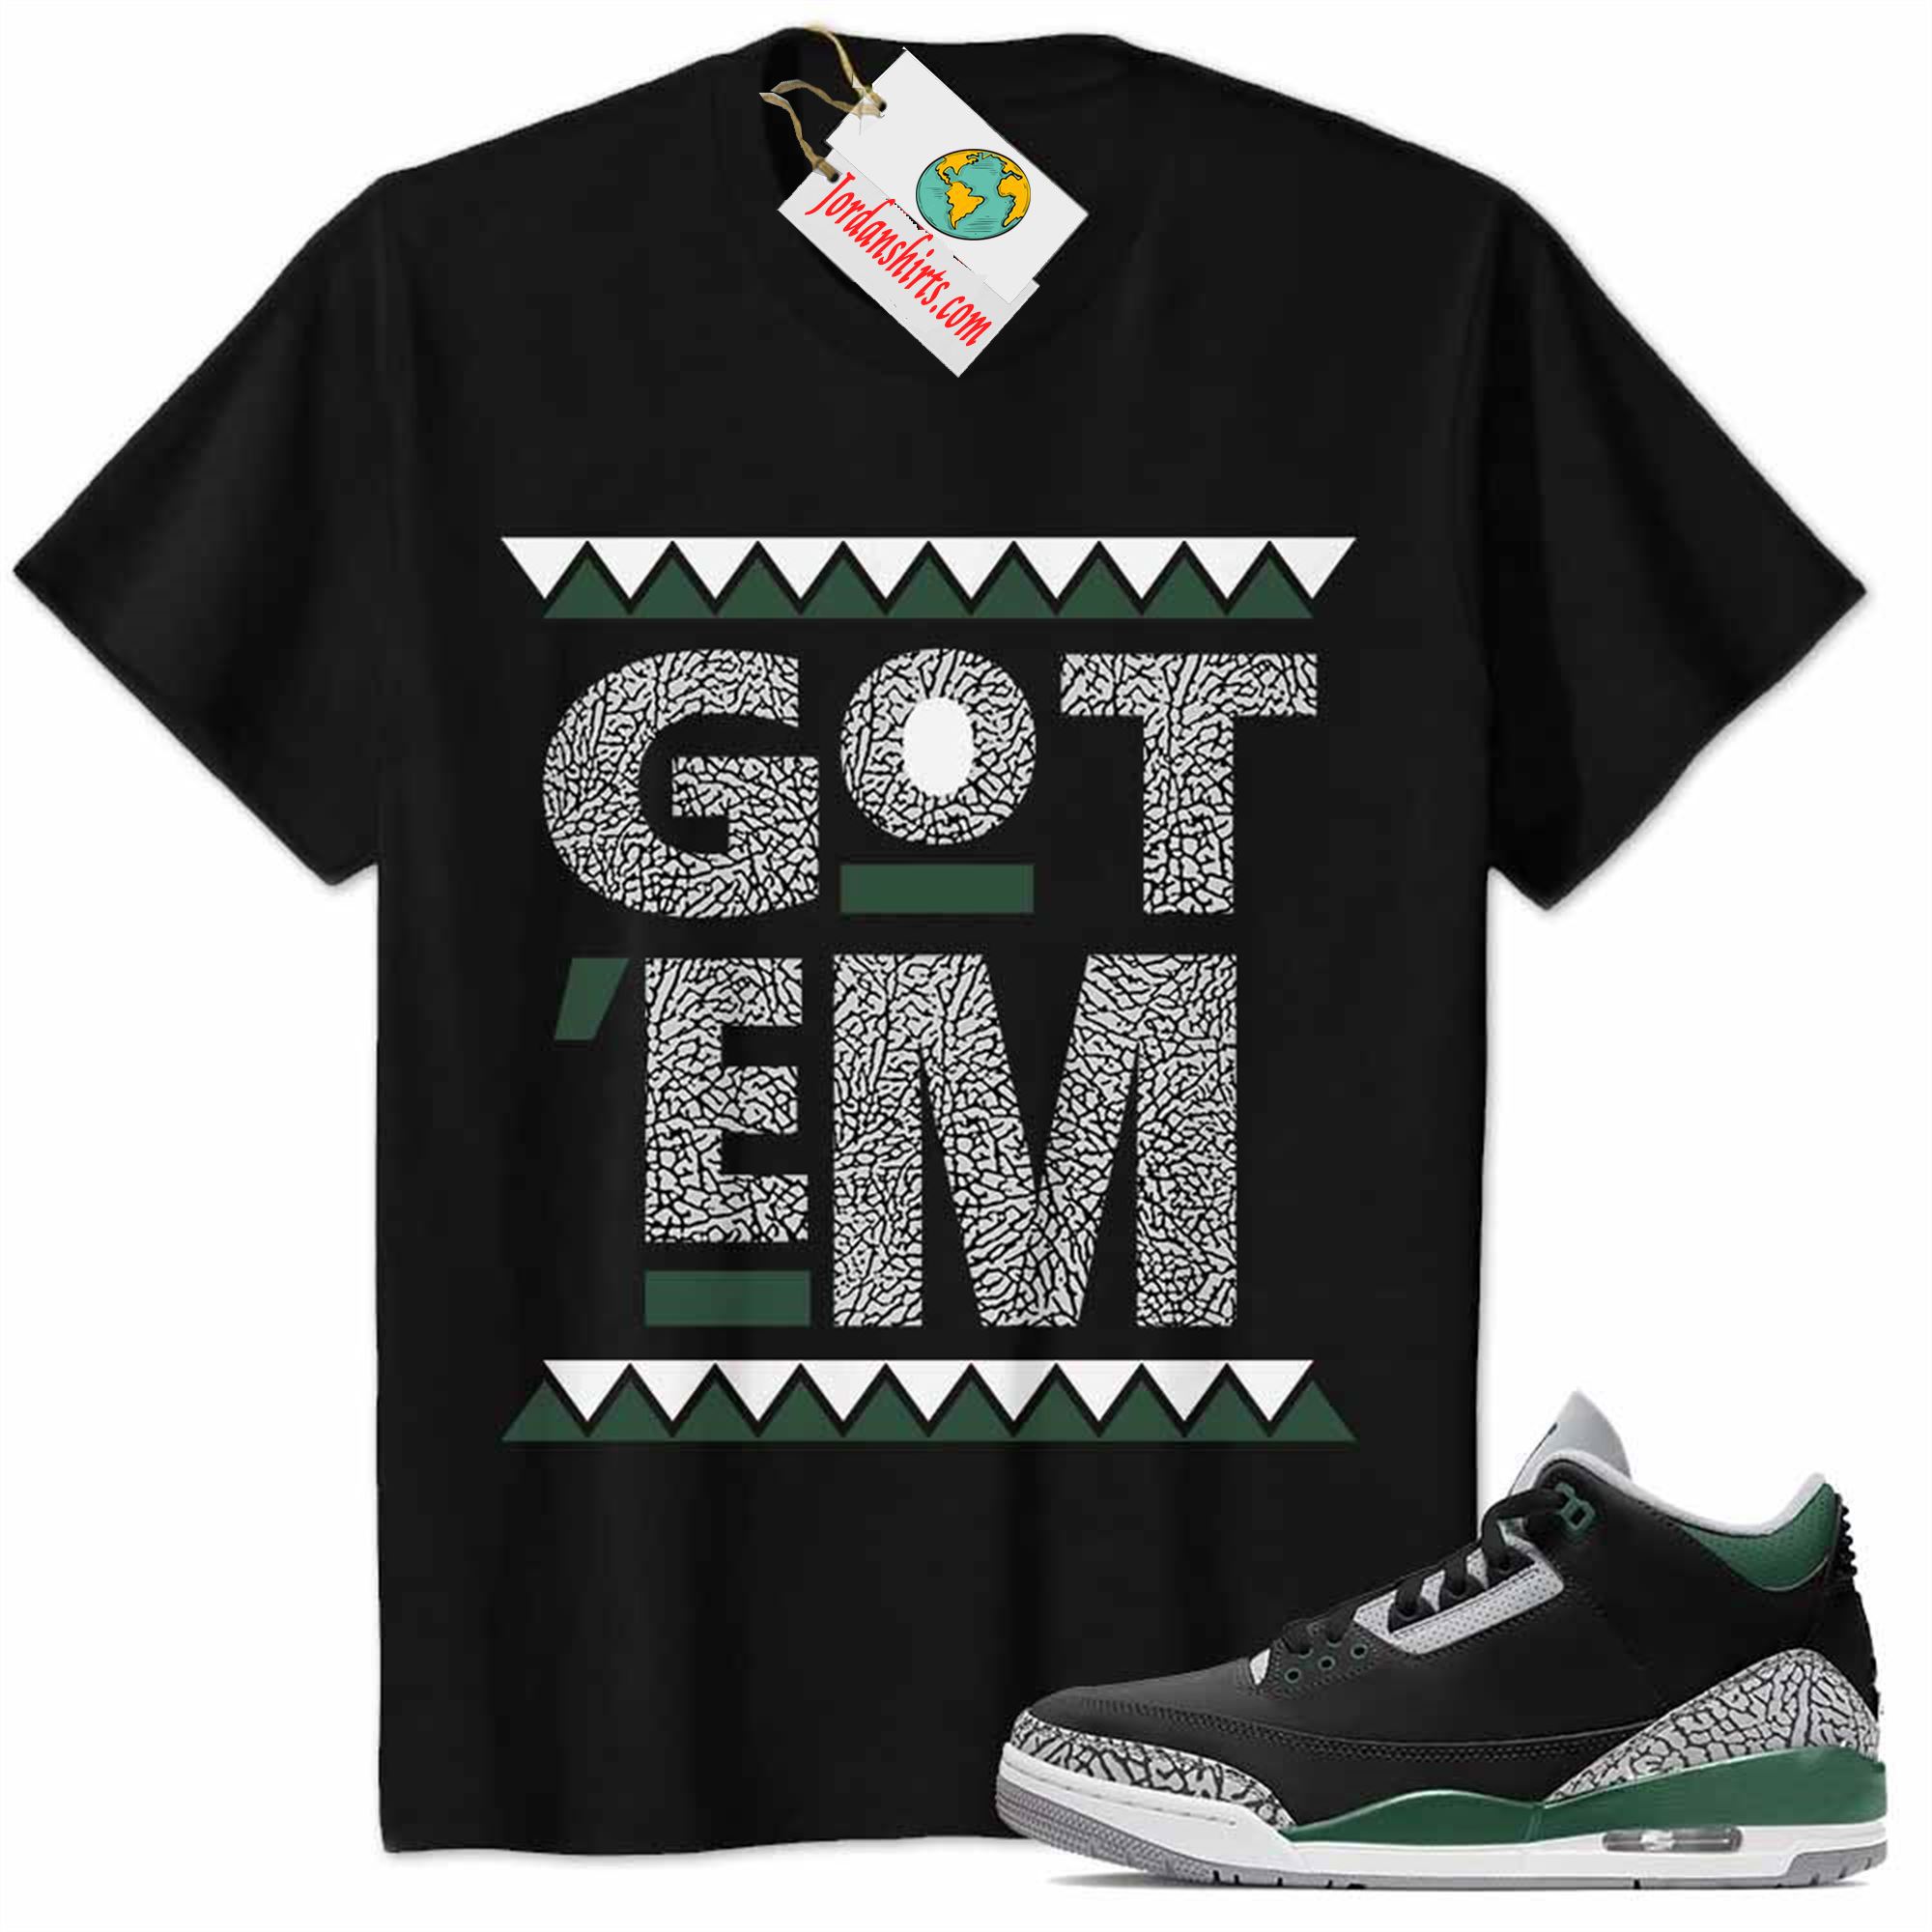 Jordan 3 Shirt, African Black Design Got Em Black Air Jordan 3 Pine Green 3s Full Size Up To 5xl